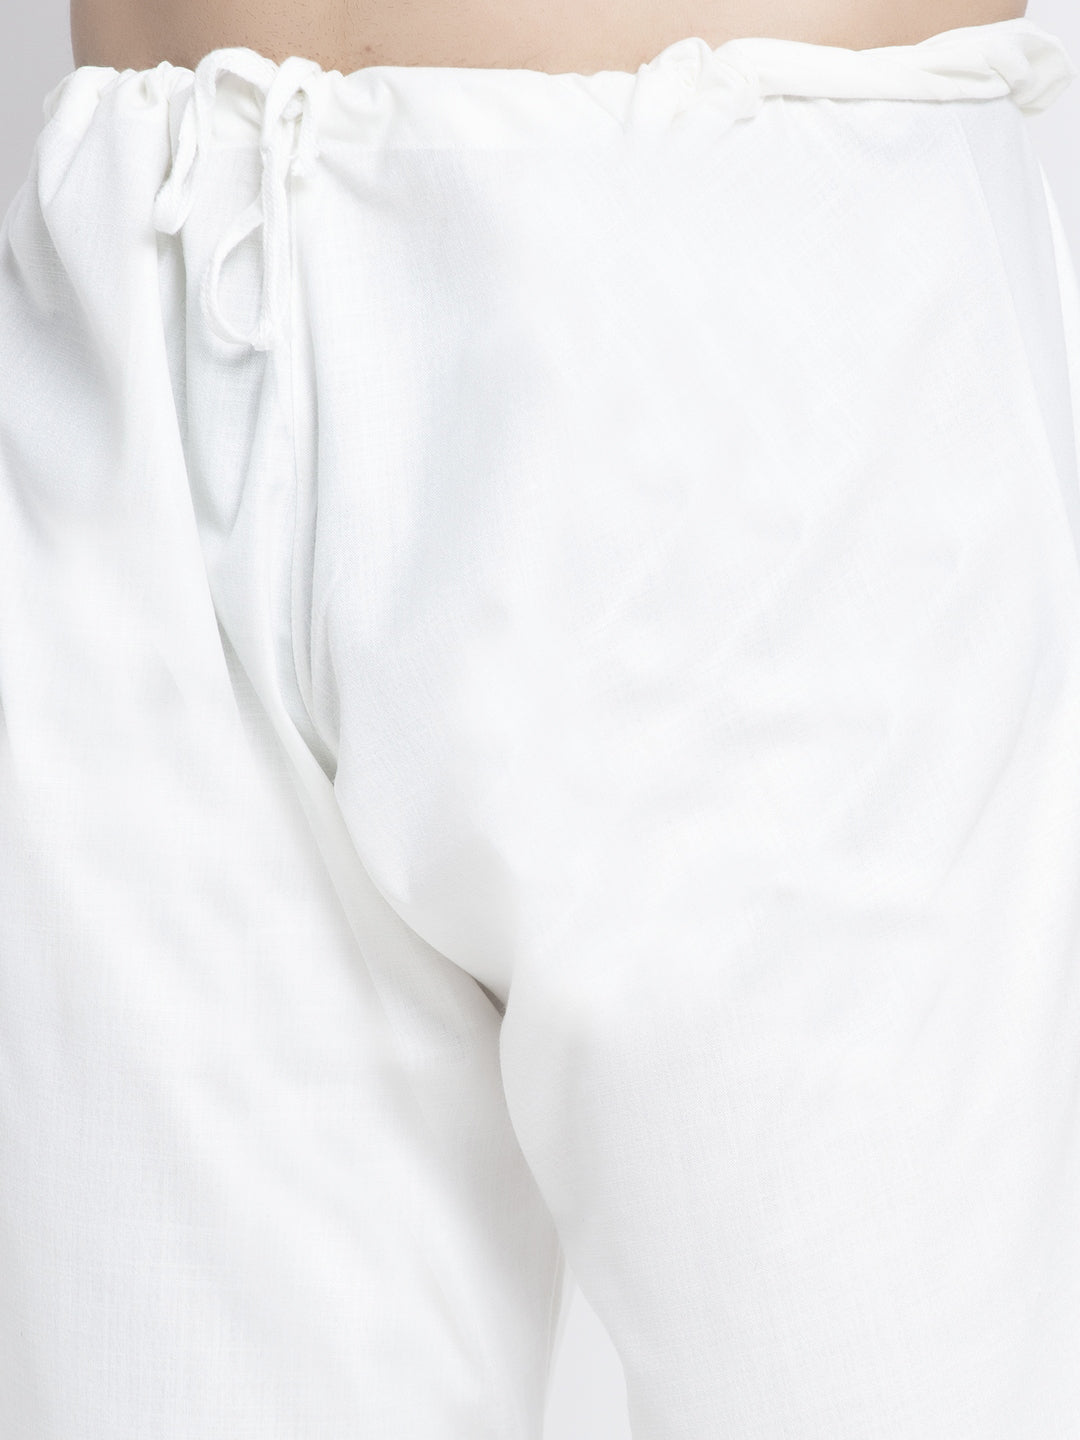 Men's Solid White Cotton Kurta Payjama with Solid Charcoal Waistcoat ( JOKPWC OW-F 4021 Charcoal ) - Virat Fashions